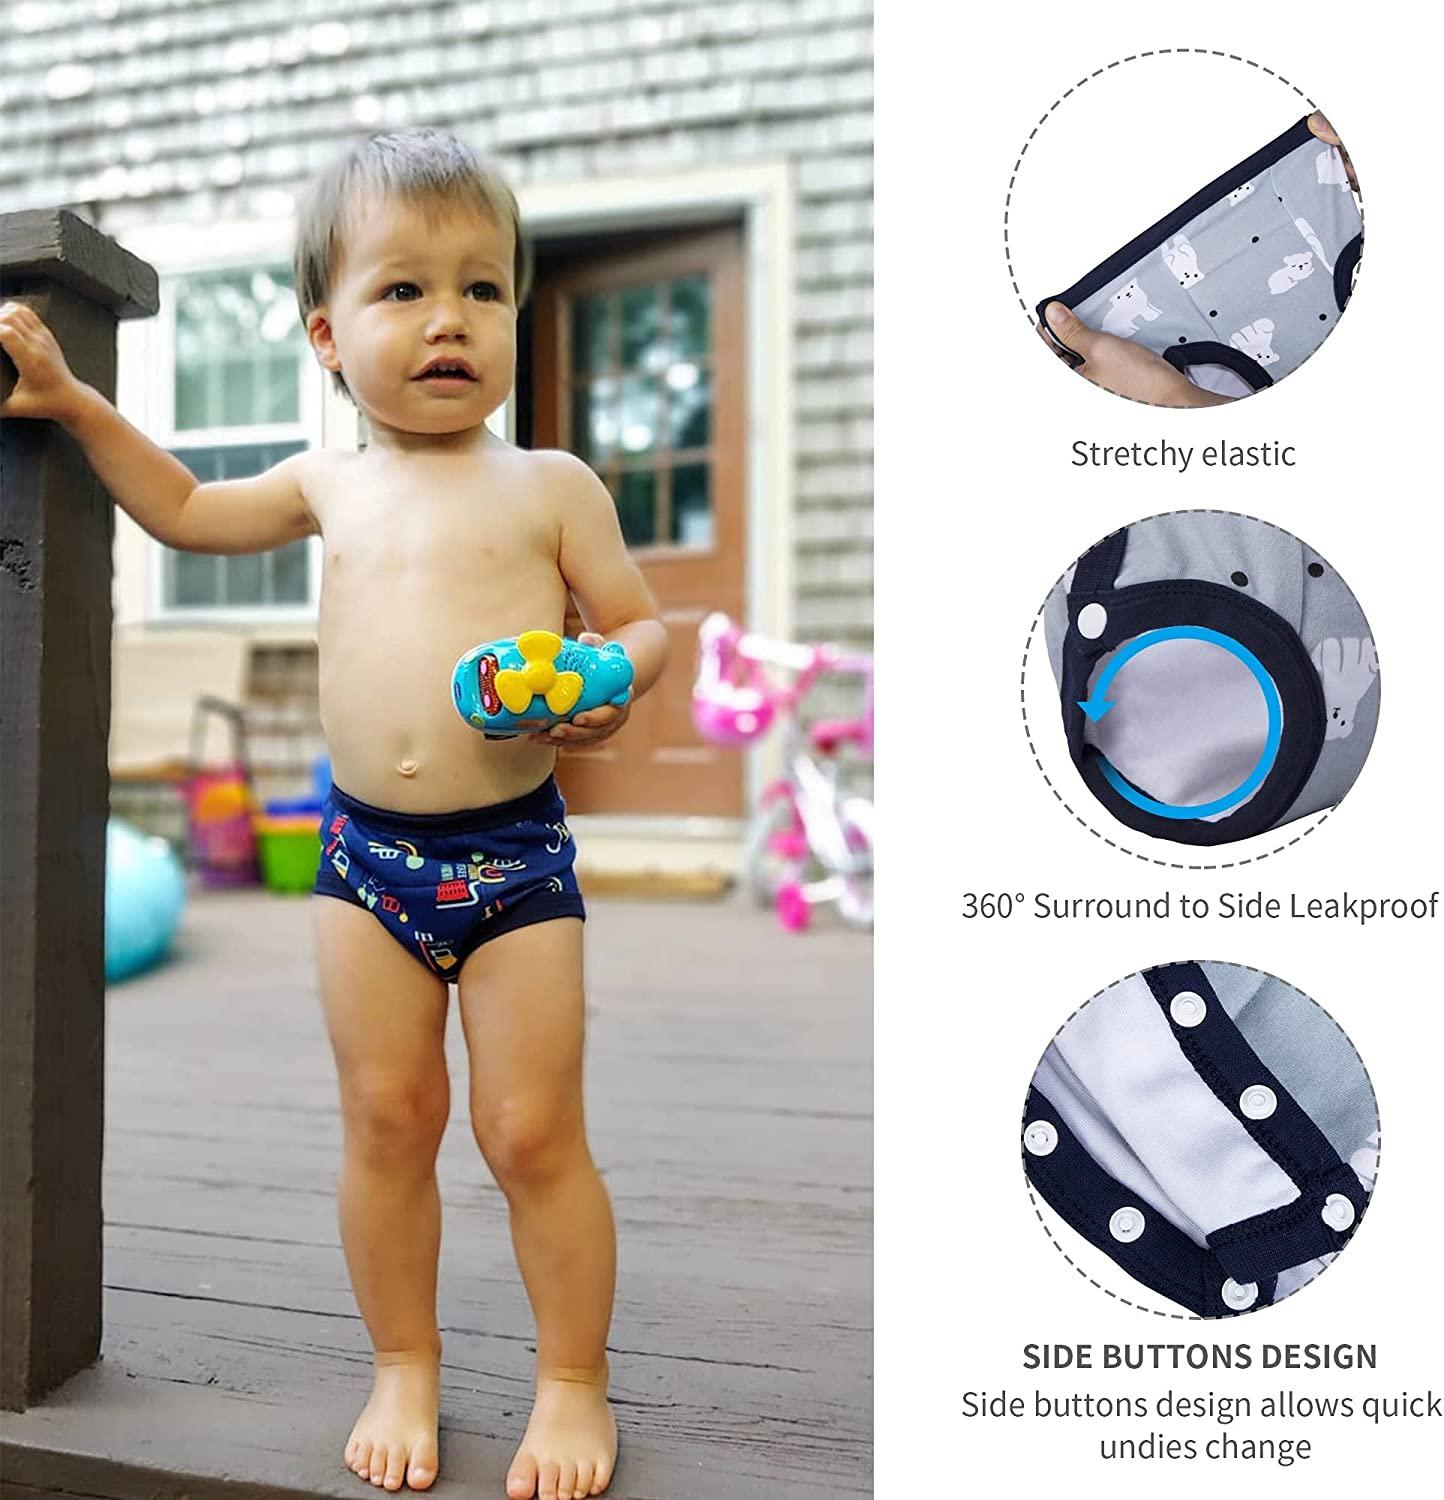 Buy BIG ELEPHANT Toddler Potty Training Underwear - Baby Boys